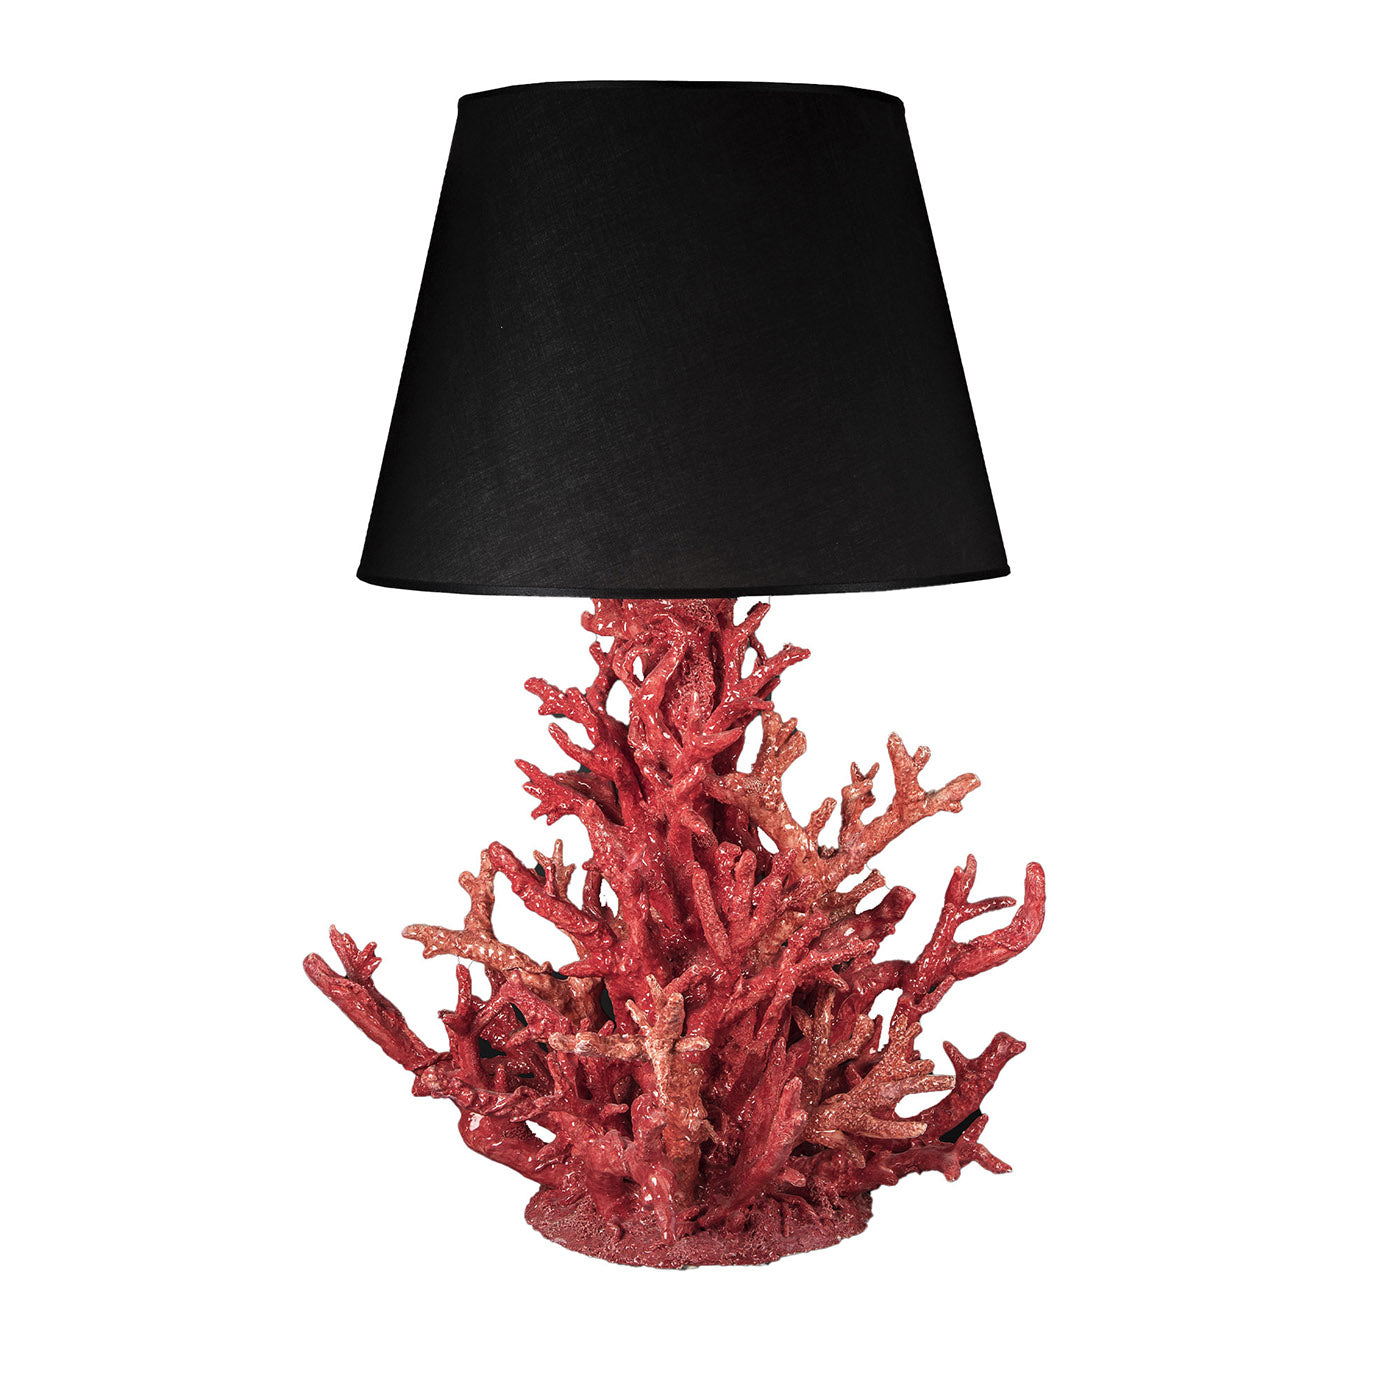 Coralli Coral & Black Table Lamp by Antonio Fullin - Main view